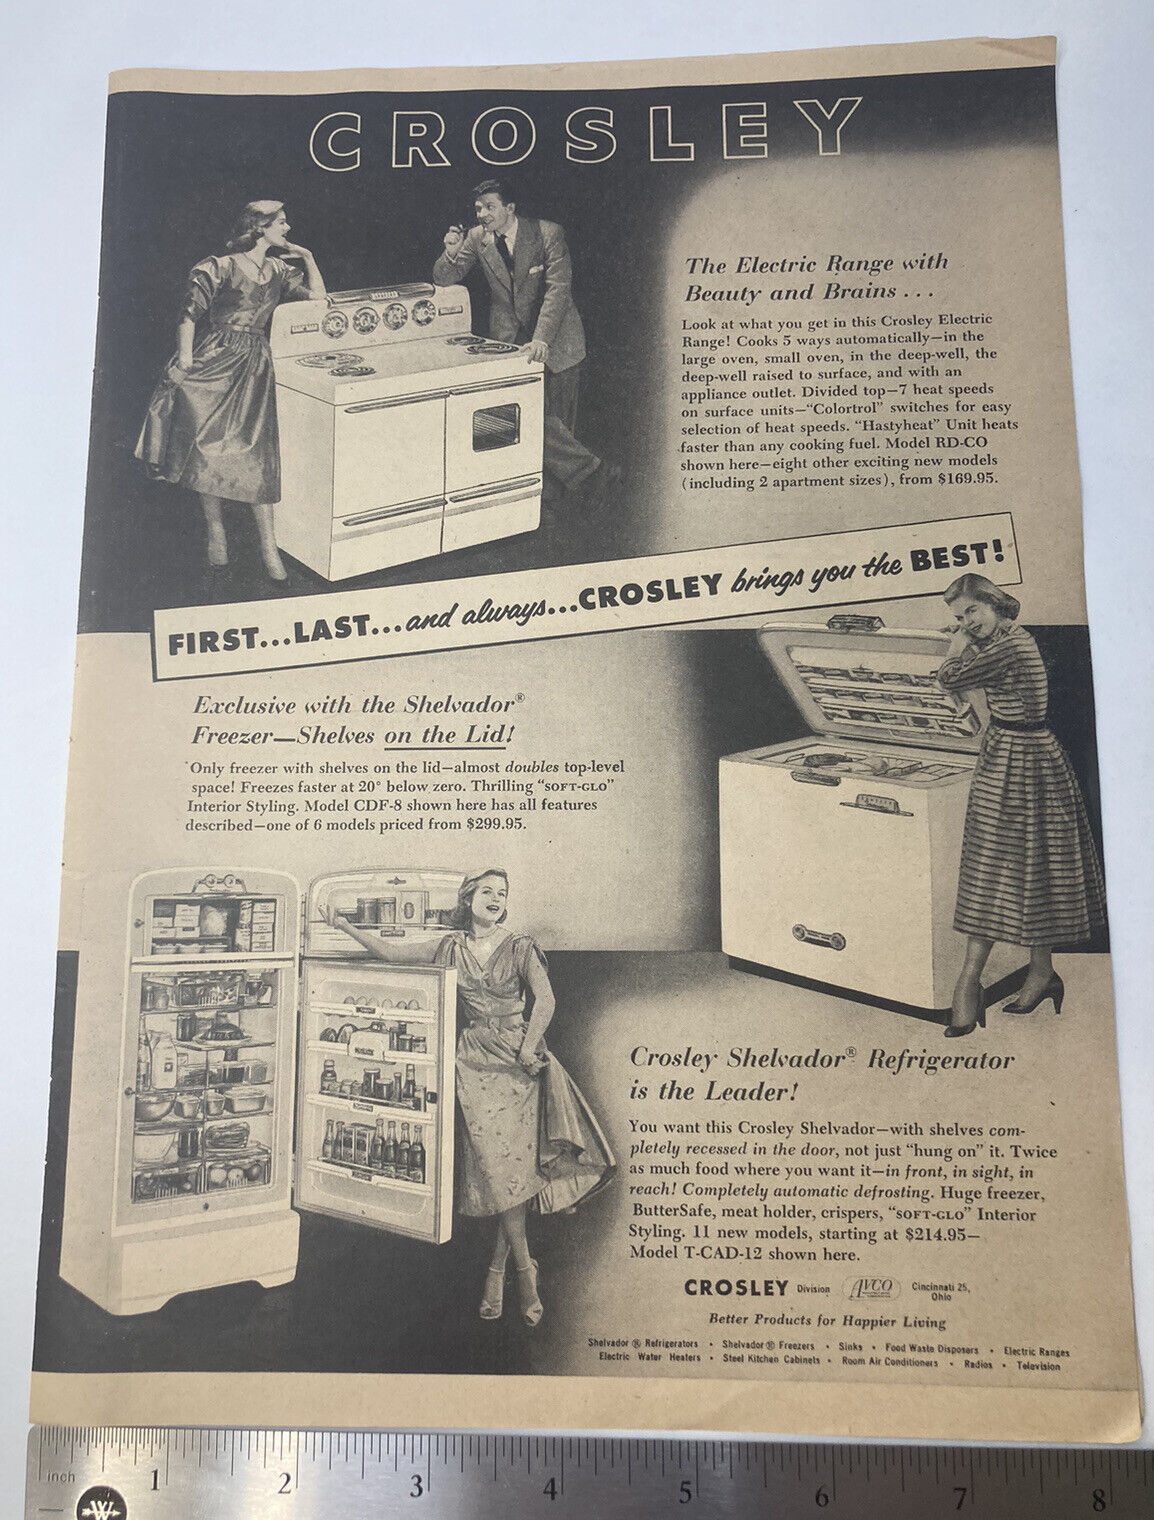 Crosley Electric Range W/ Beauty & Brains, GMC VINTAGE 1952 Print Ad 11x16\